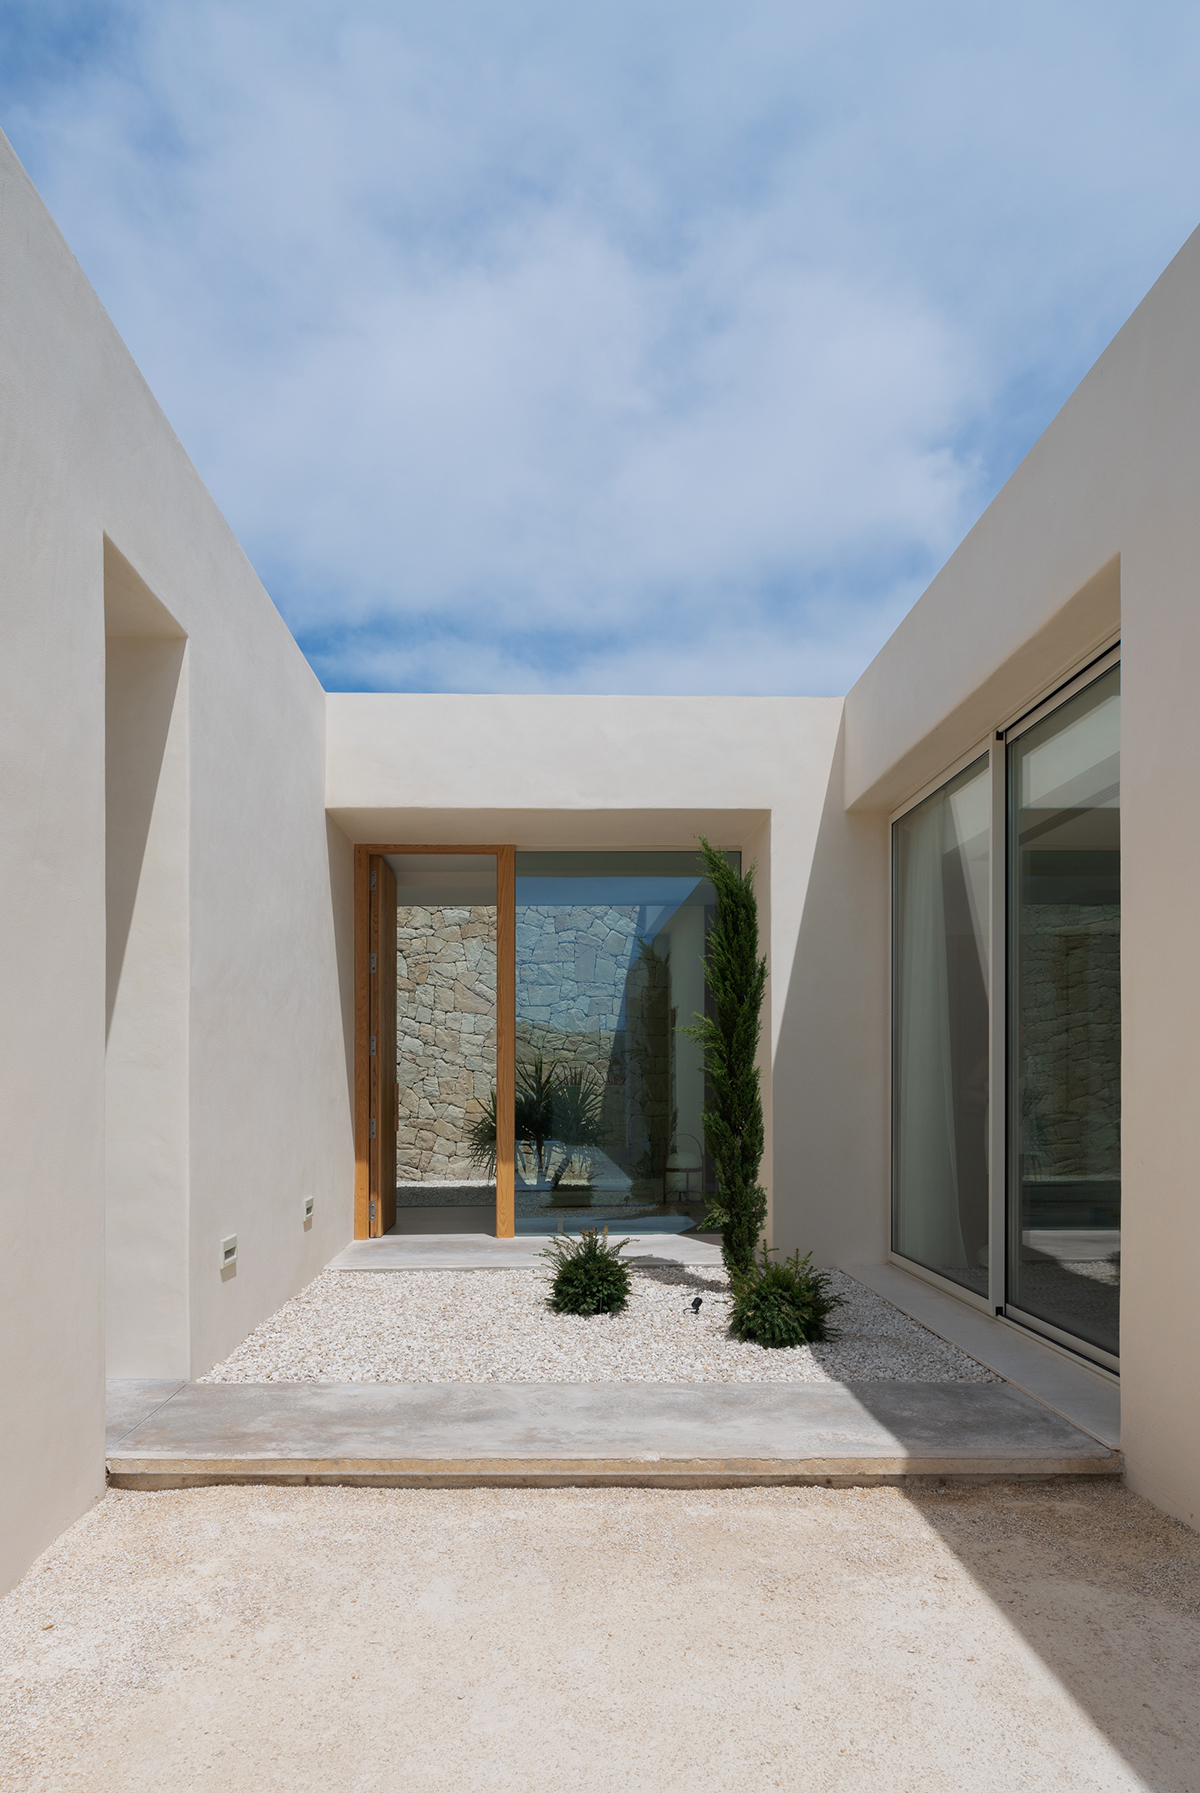 RafaCub - bicubic casa caliza mediterranea